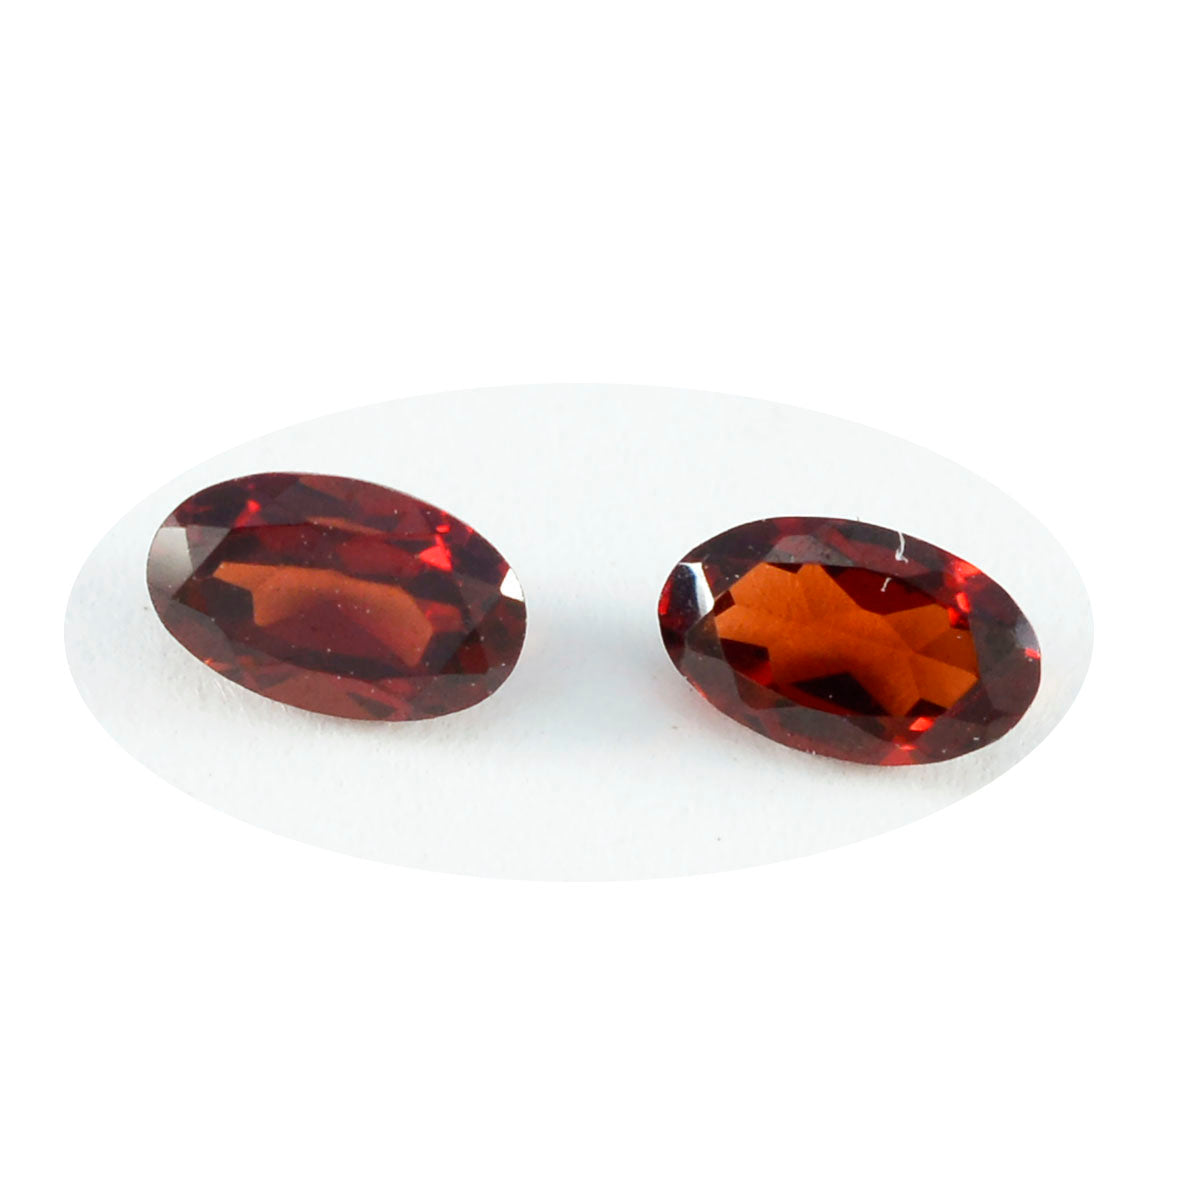 Riyogems 1PC Genuine Red Garnet Faceted 7x9 mm Oval Shape Nice Quality Gemstone